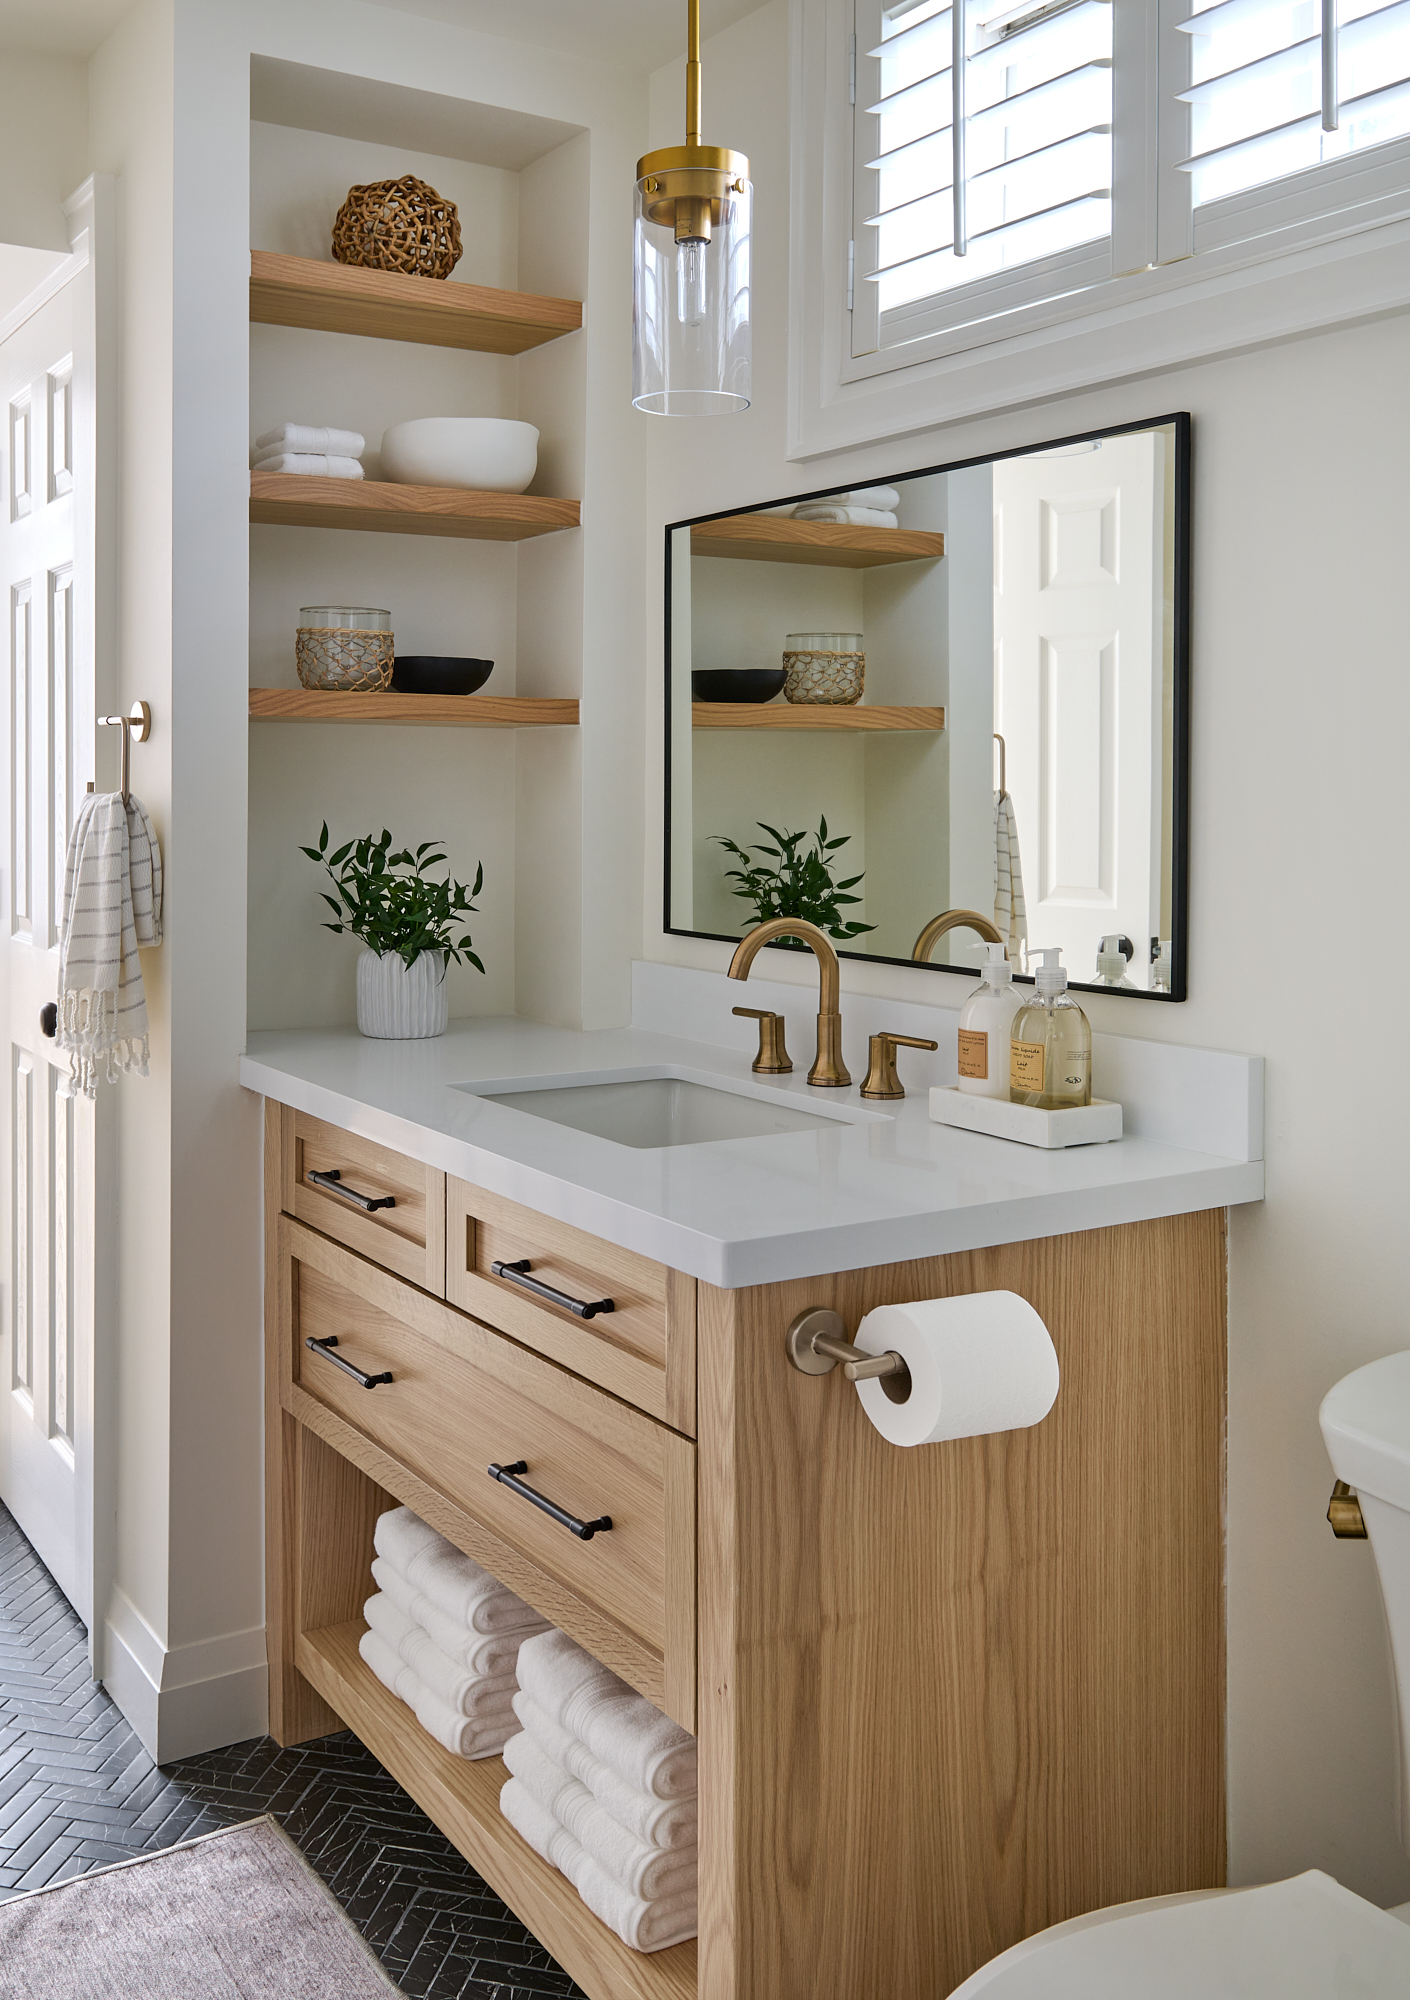 bathroom interior designed with oak wood vanity, gold plumbing fixtures and open shelving next to the vanity